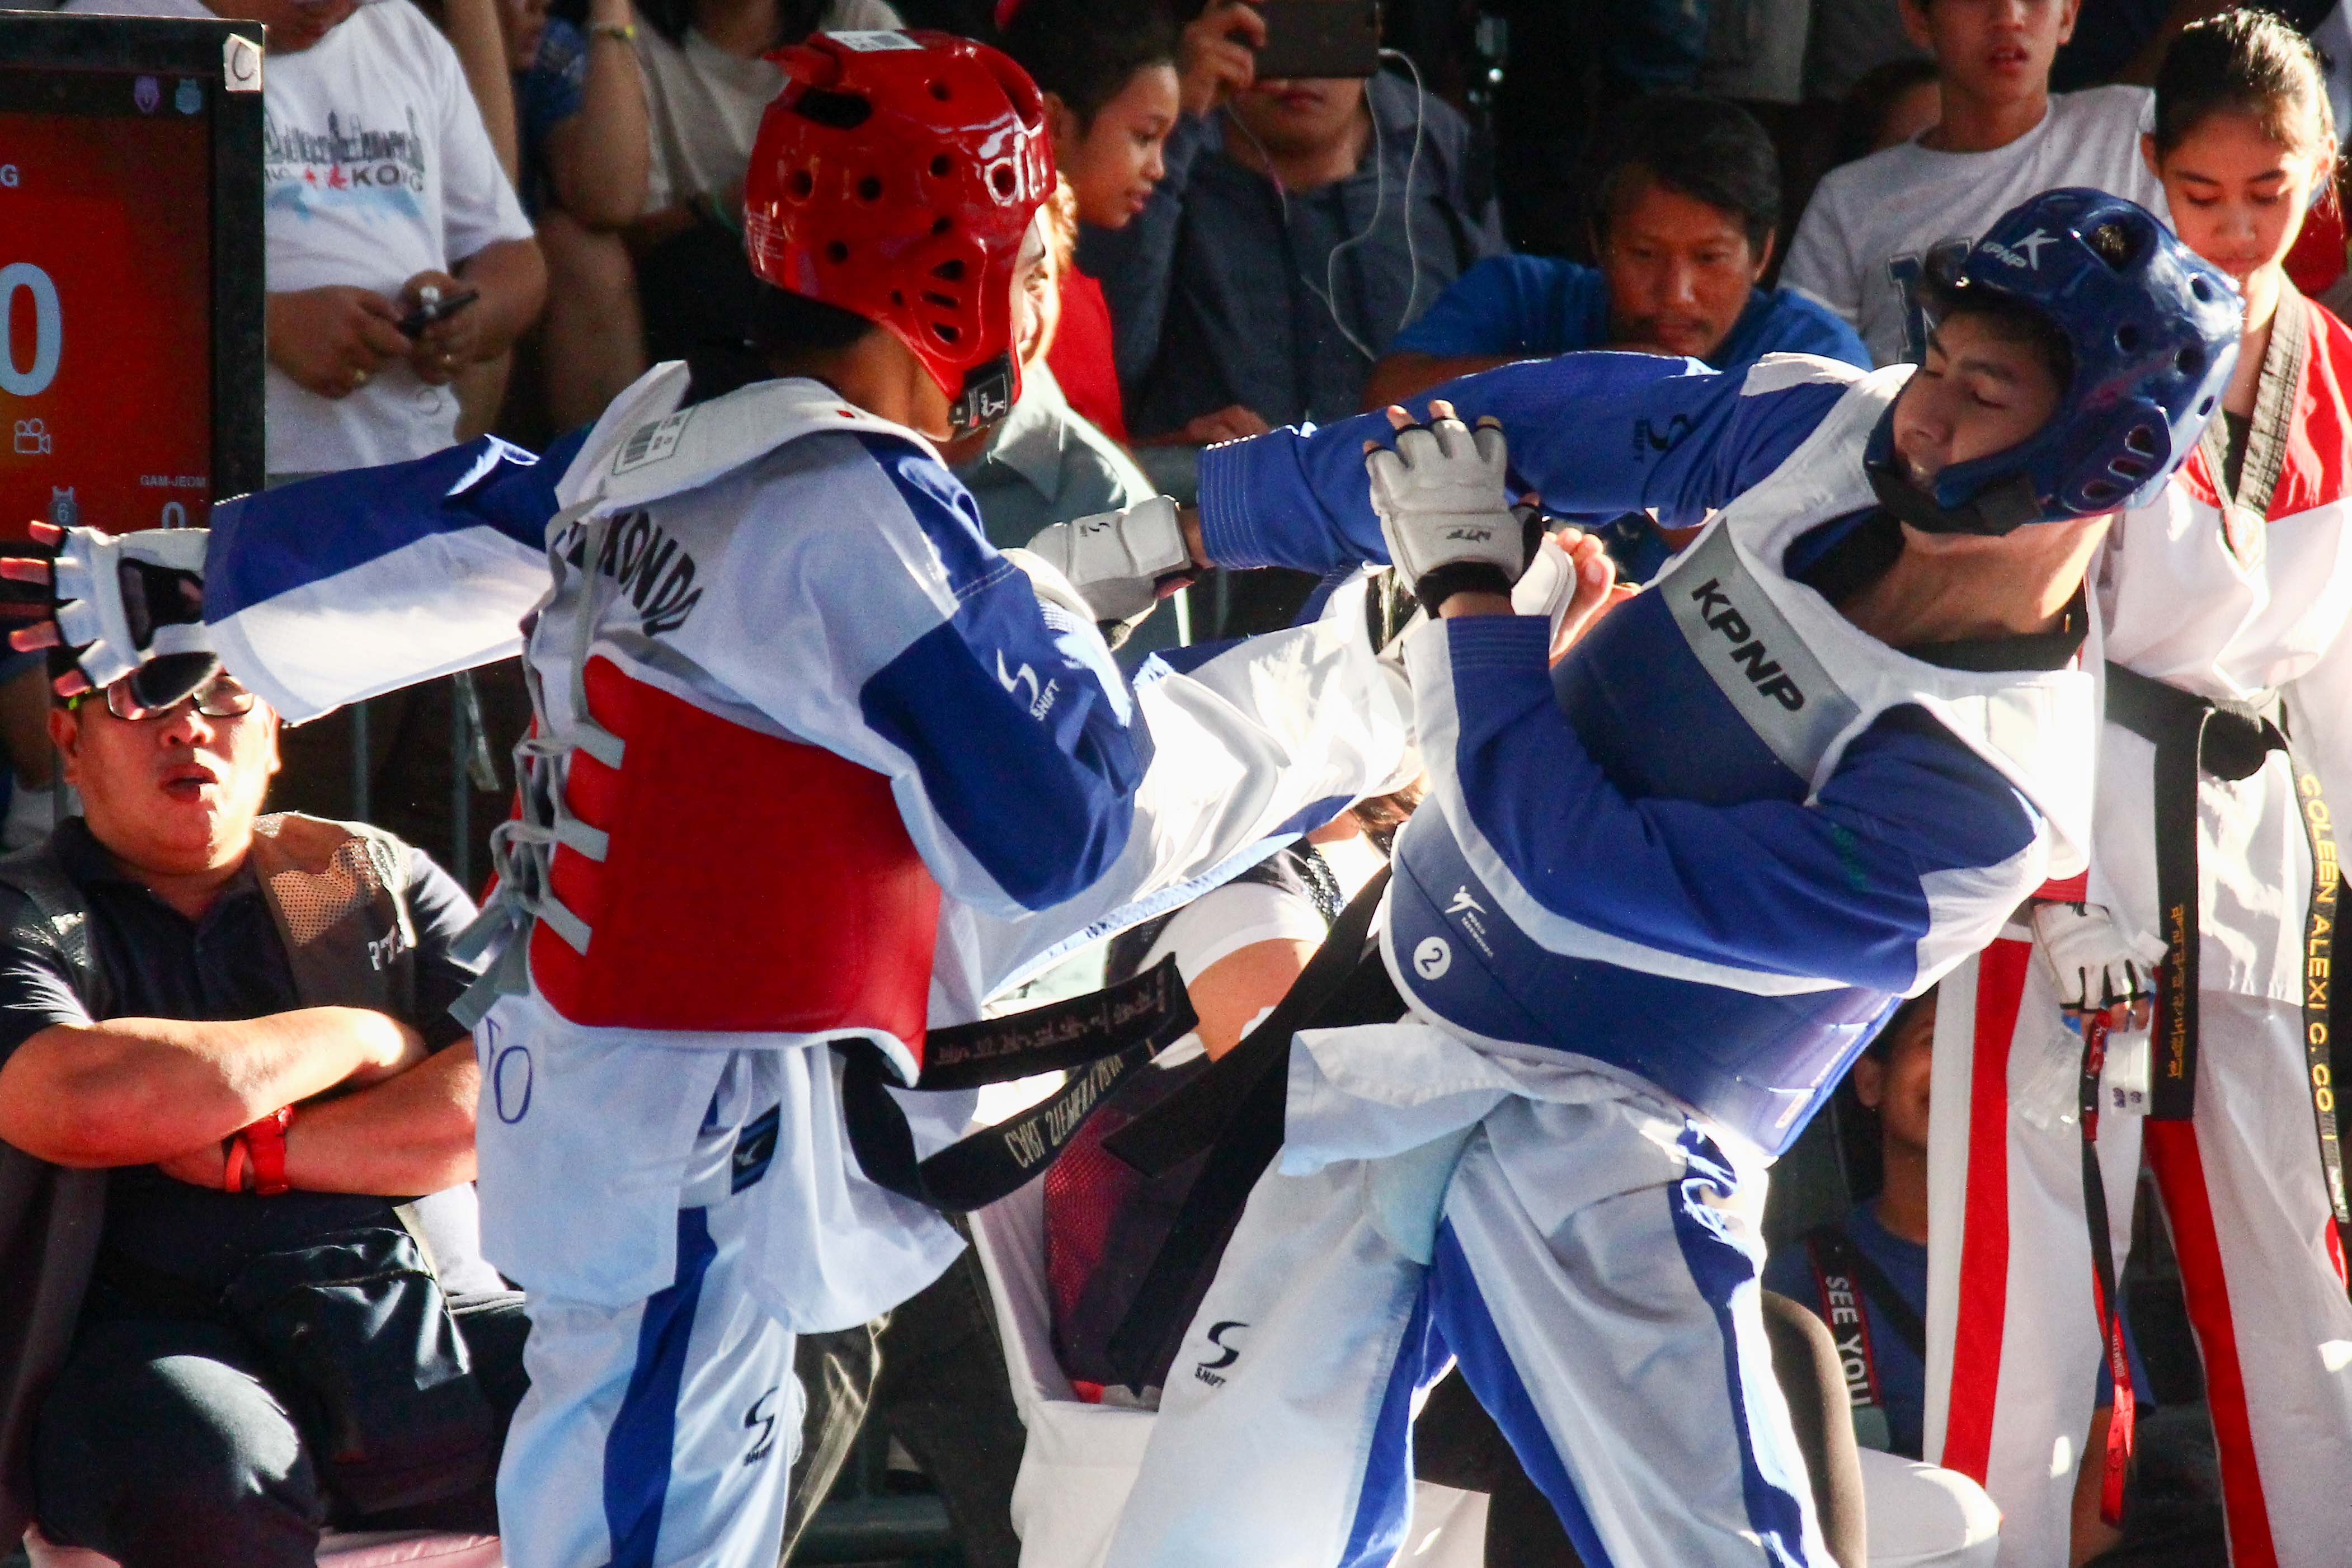 taekwondocpjpta-1